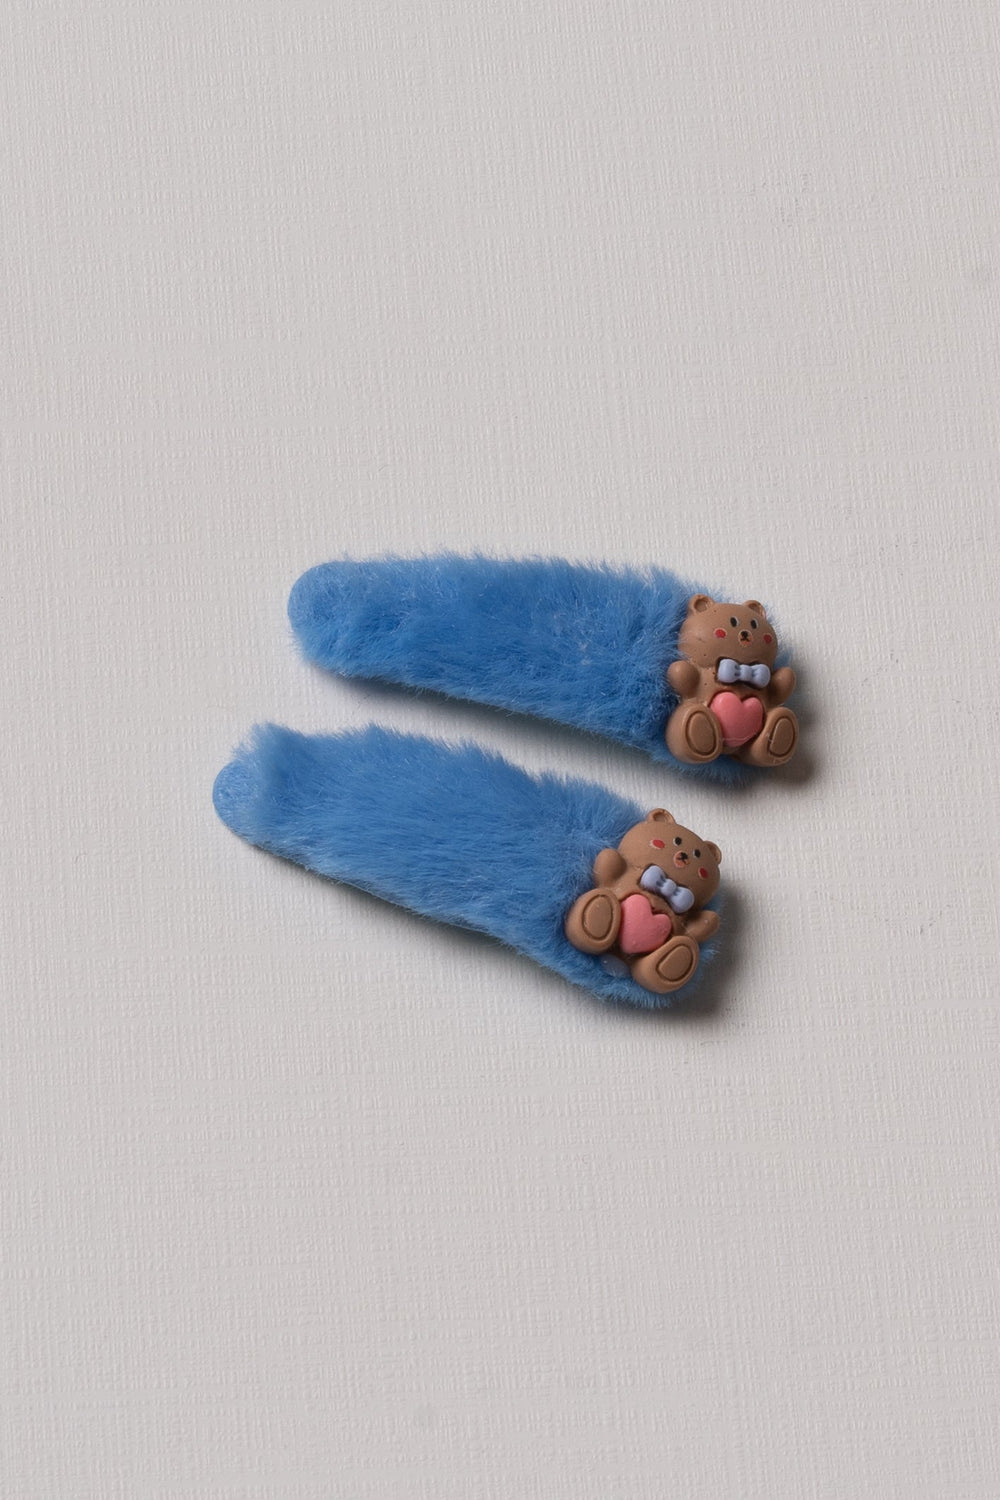 The Nesavu Tick Tac Clip Whimsical Blue Furry Character Hair Clip Nesavu Blue / Style 2 JHTT09B Fun Blue Furry Character Hair Clip | Cute Stylish Accessory | The Nesavu